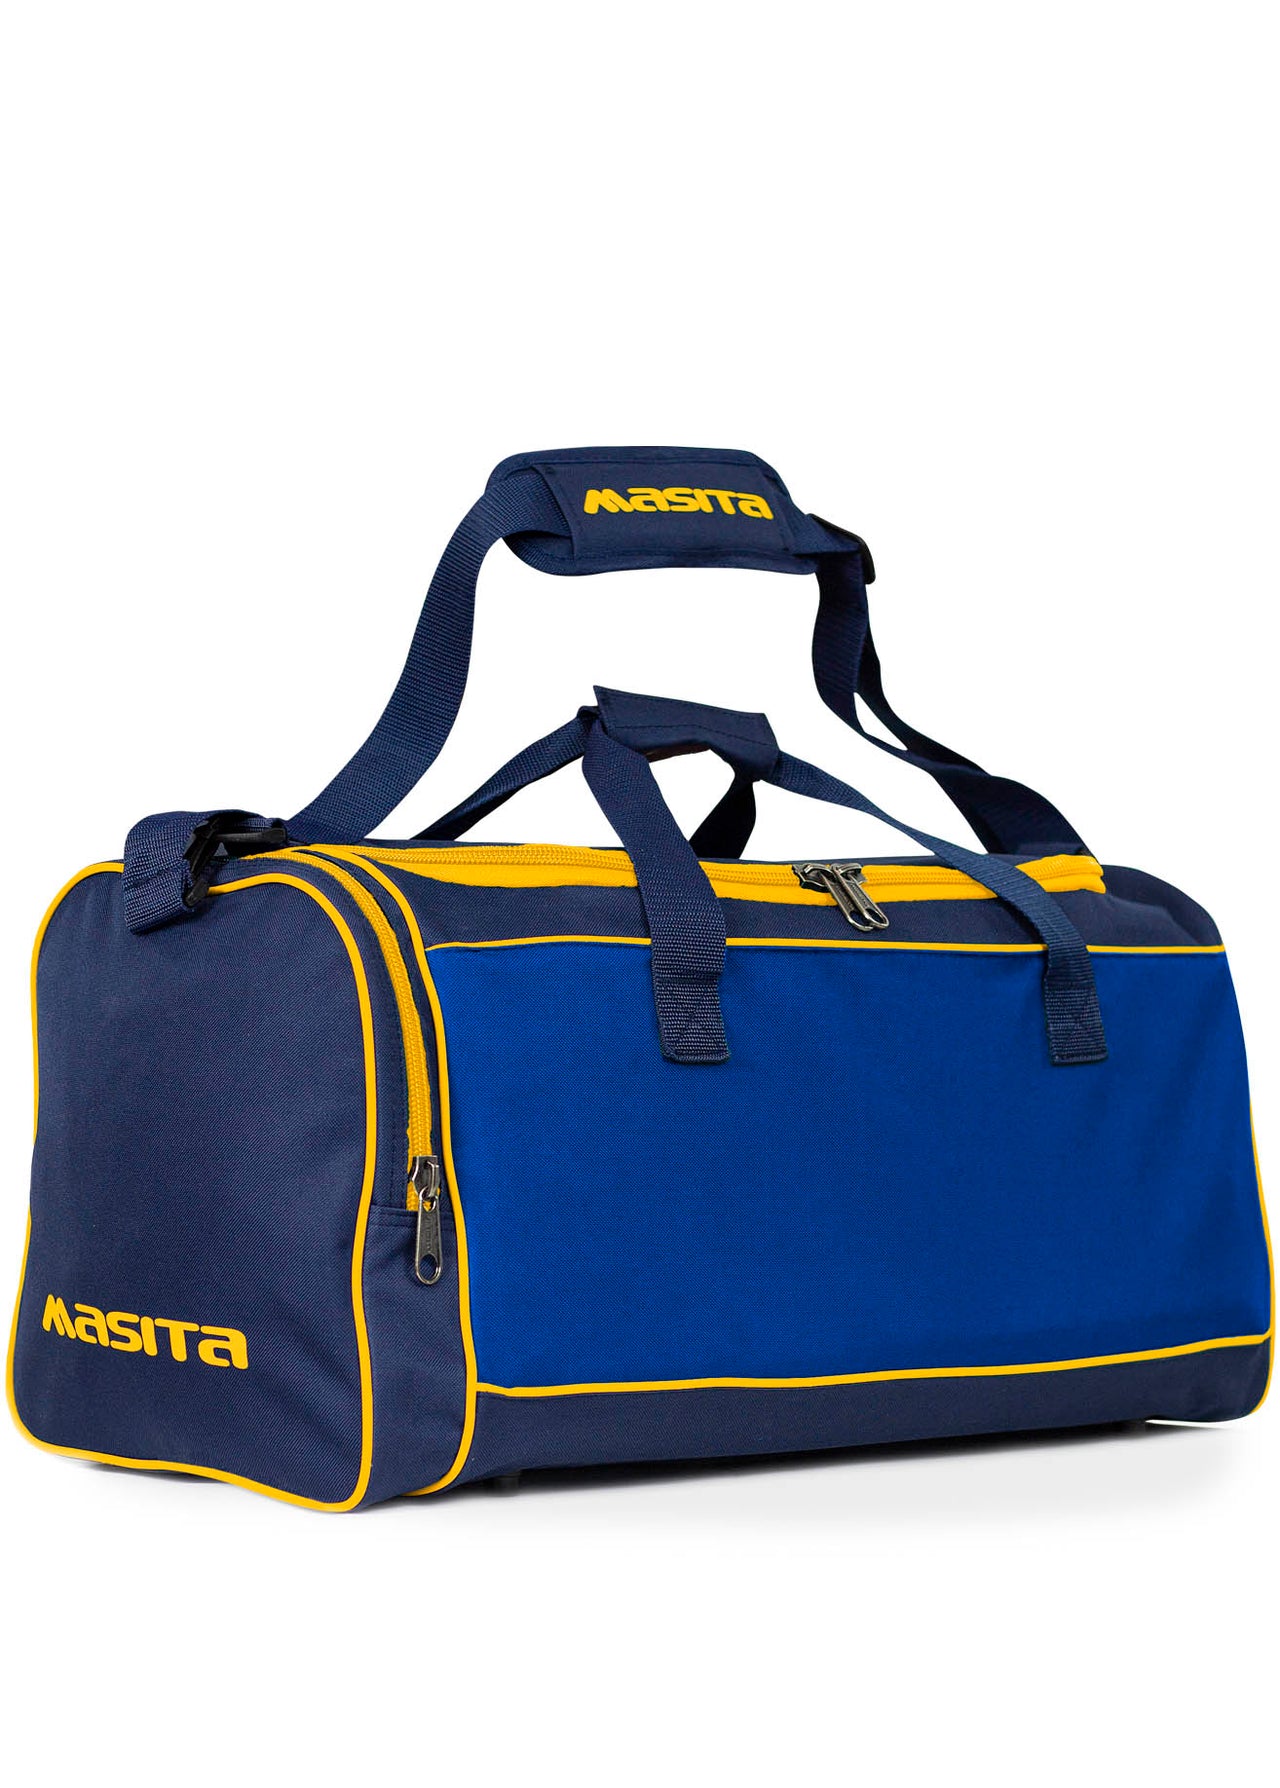 Forza Sports Bag Blue/Navy/Amber